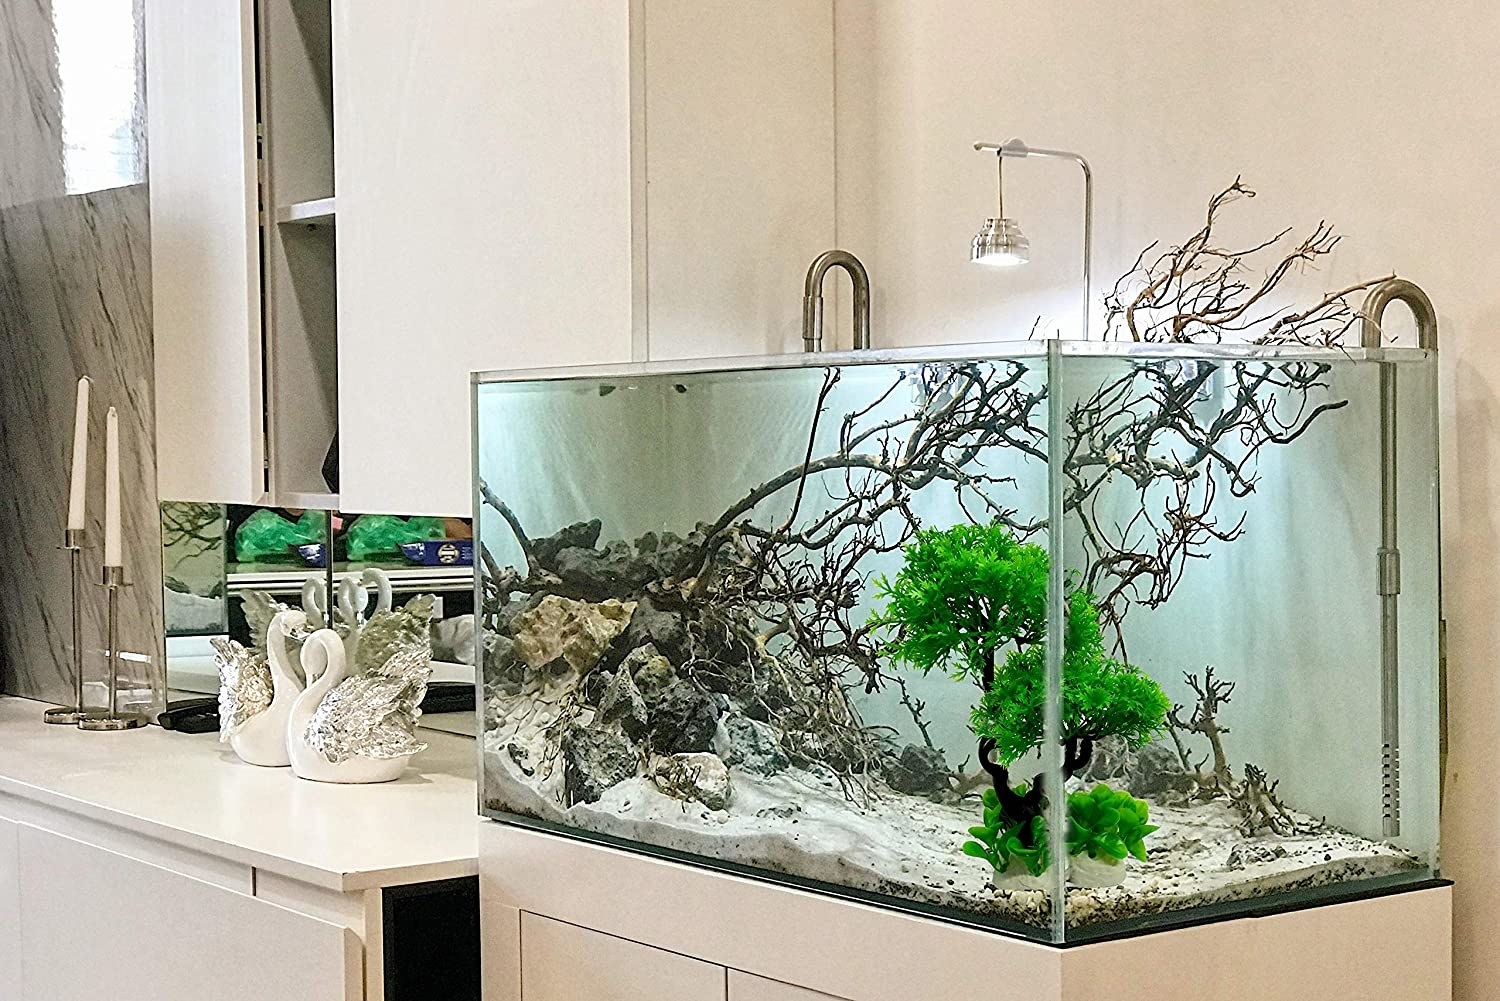 Miniature tree placed inside a fish tank.